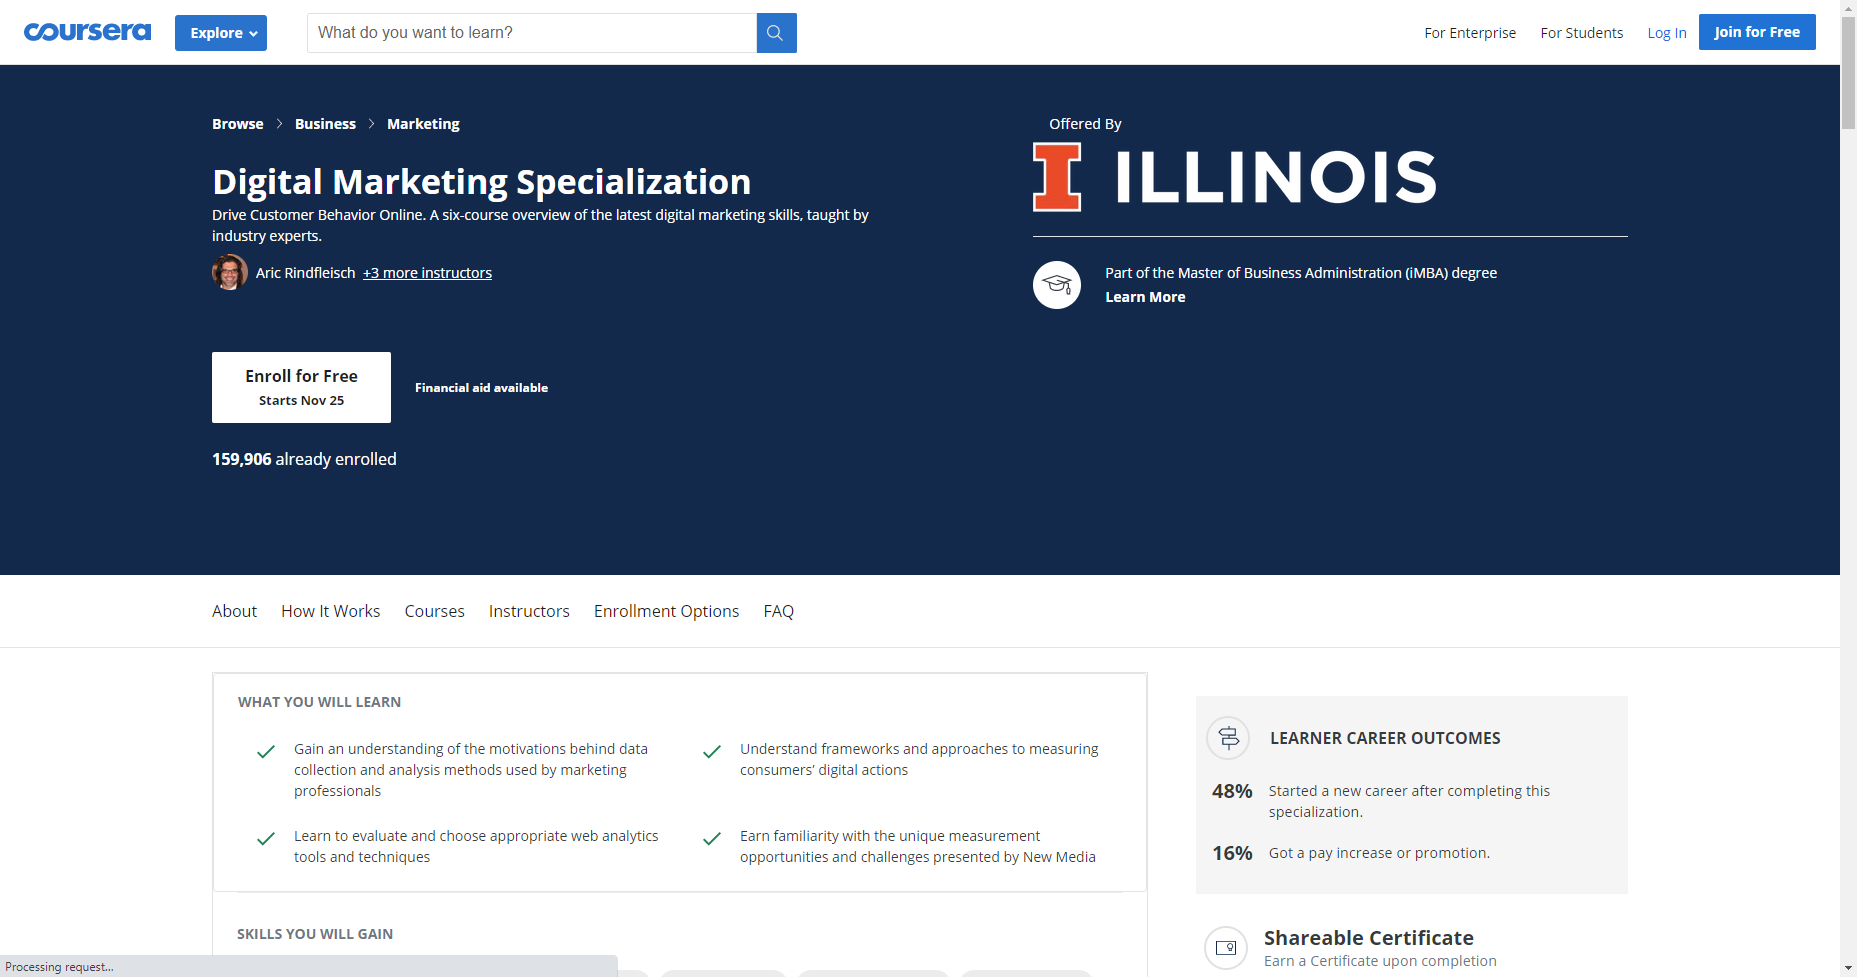 Digital Marketing Specialization by University of Illinois Urbana-Champaign on Coursera